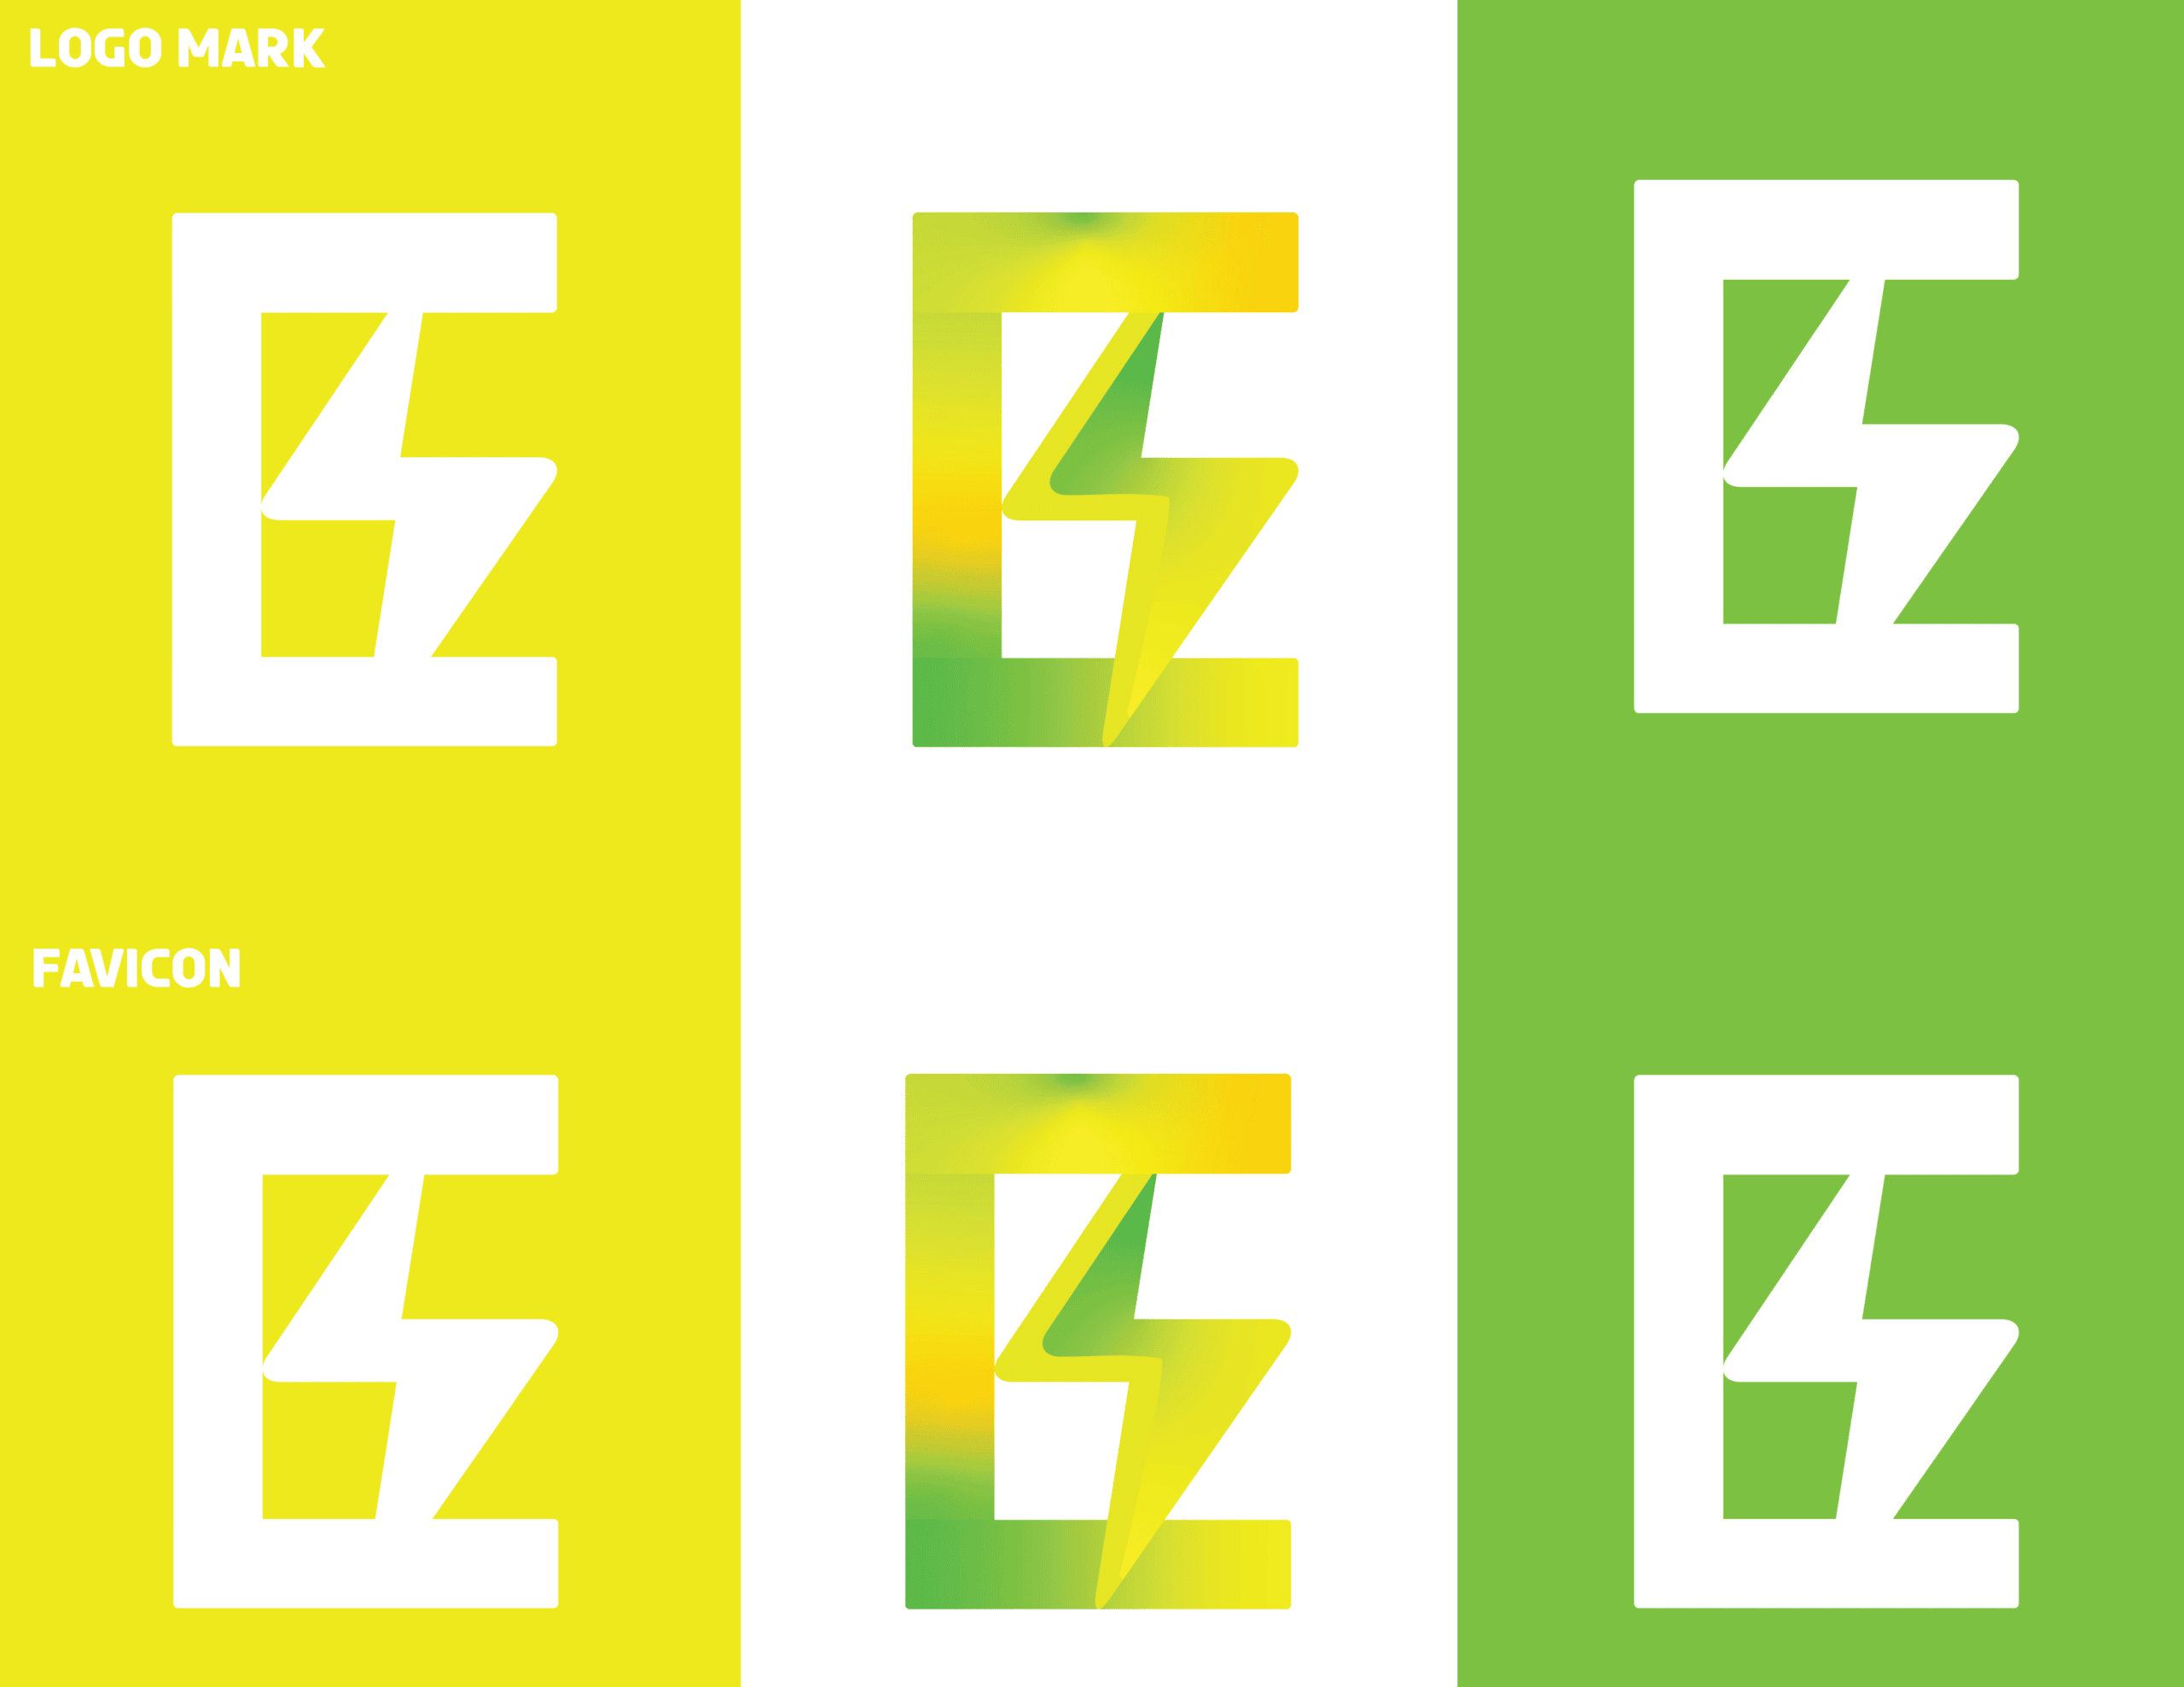 02_ElectrifyBookkeeping_Logo Mark _ Favicon